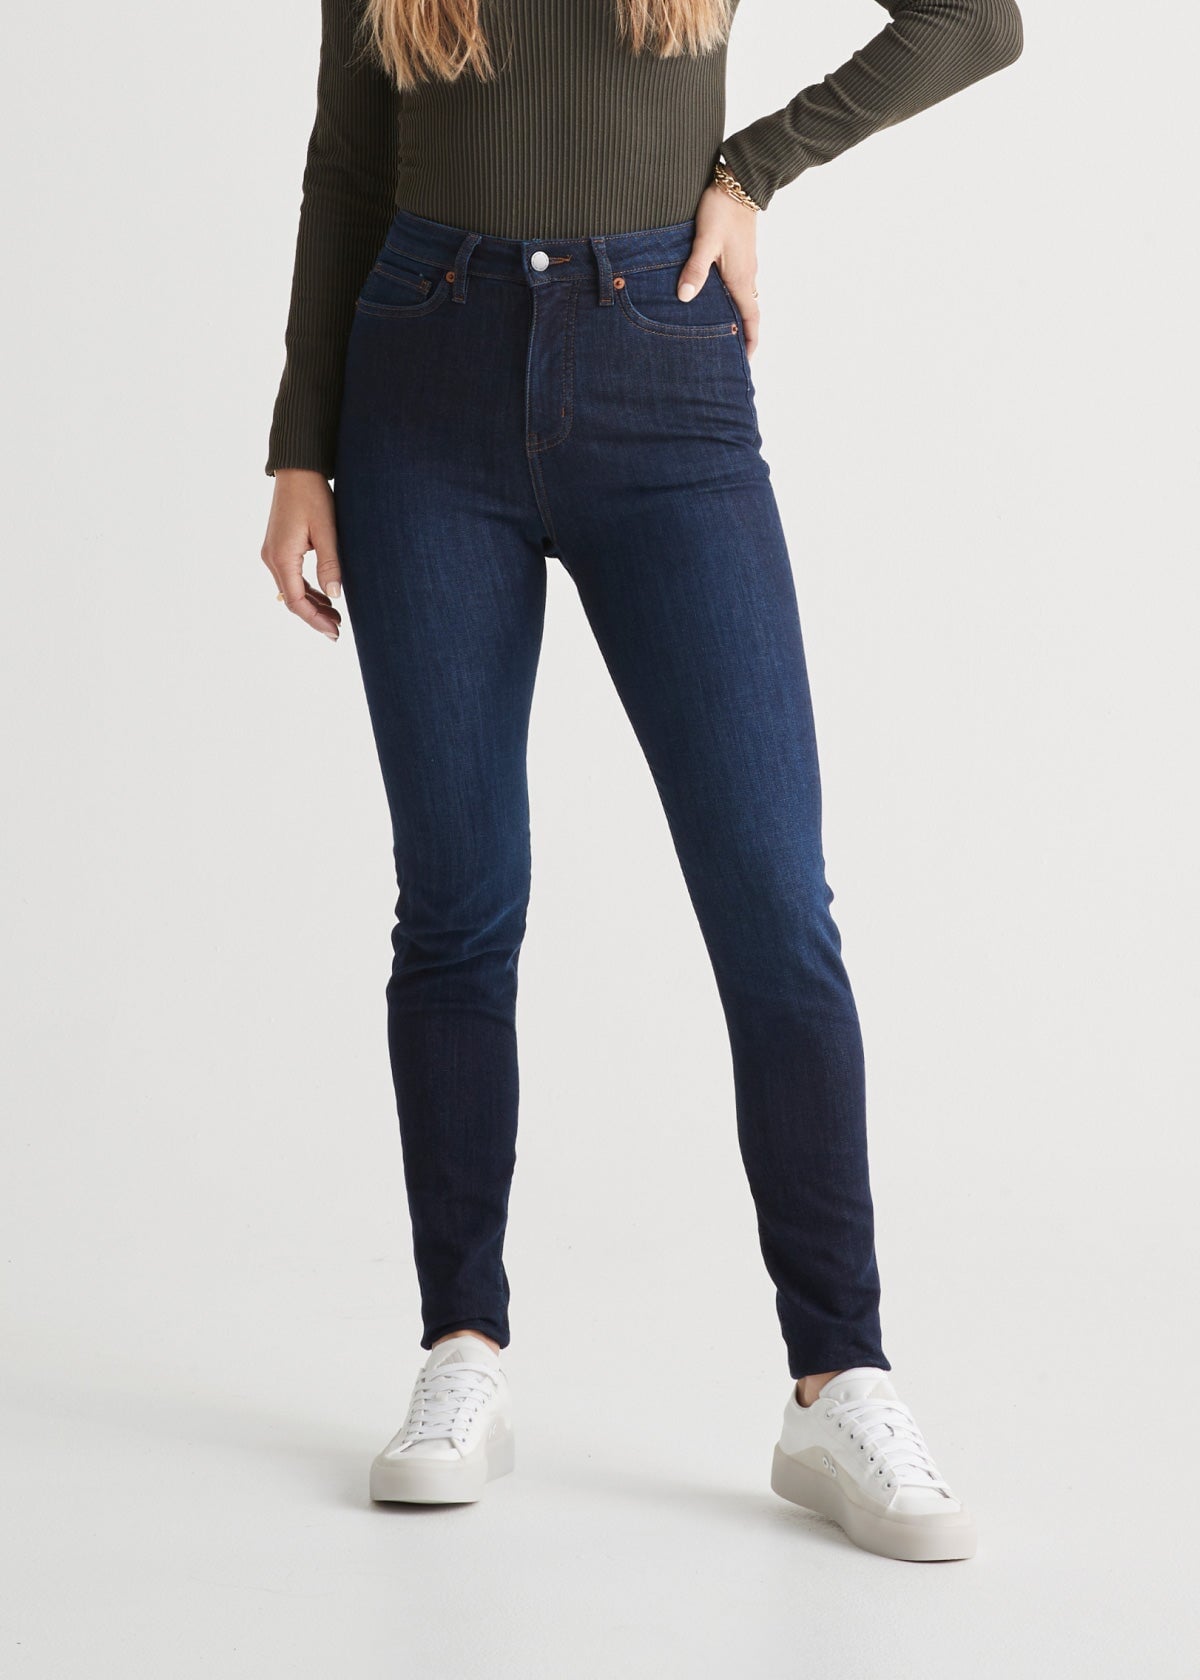 Buy Buynewtrend Denim Full Length High Rise Women Skinny Jeans (28, Dark  Blue) at Amazon.in